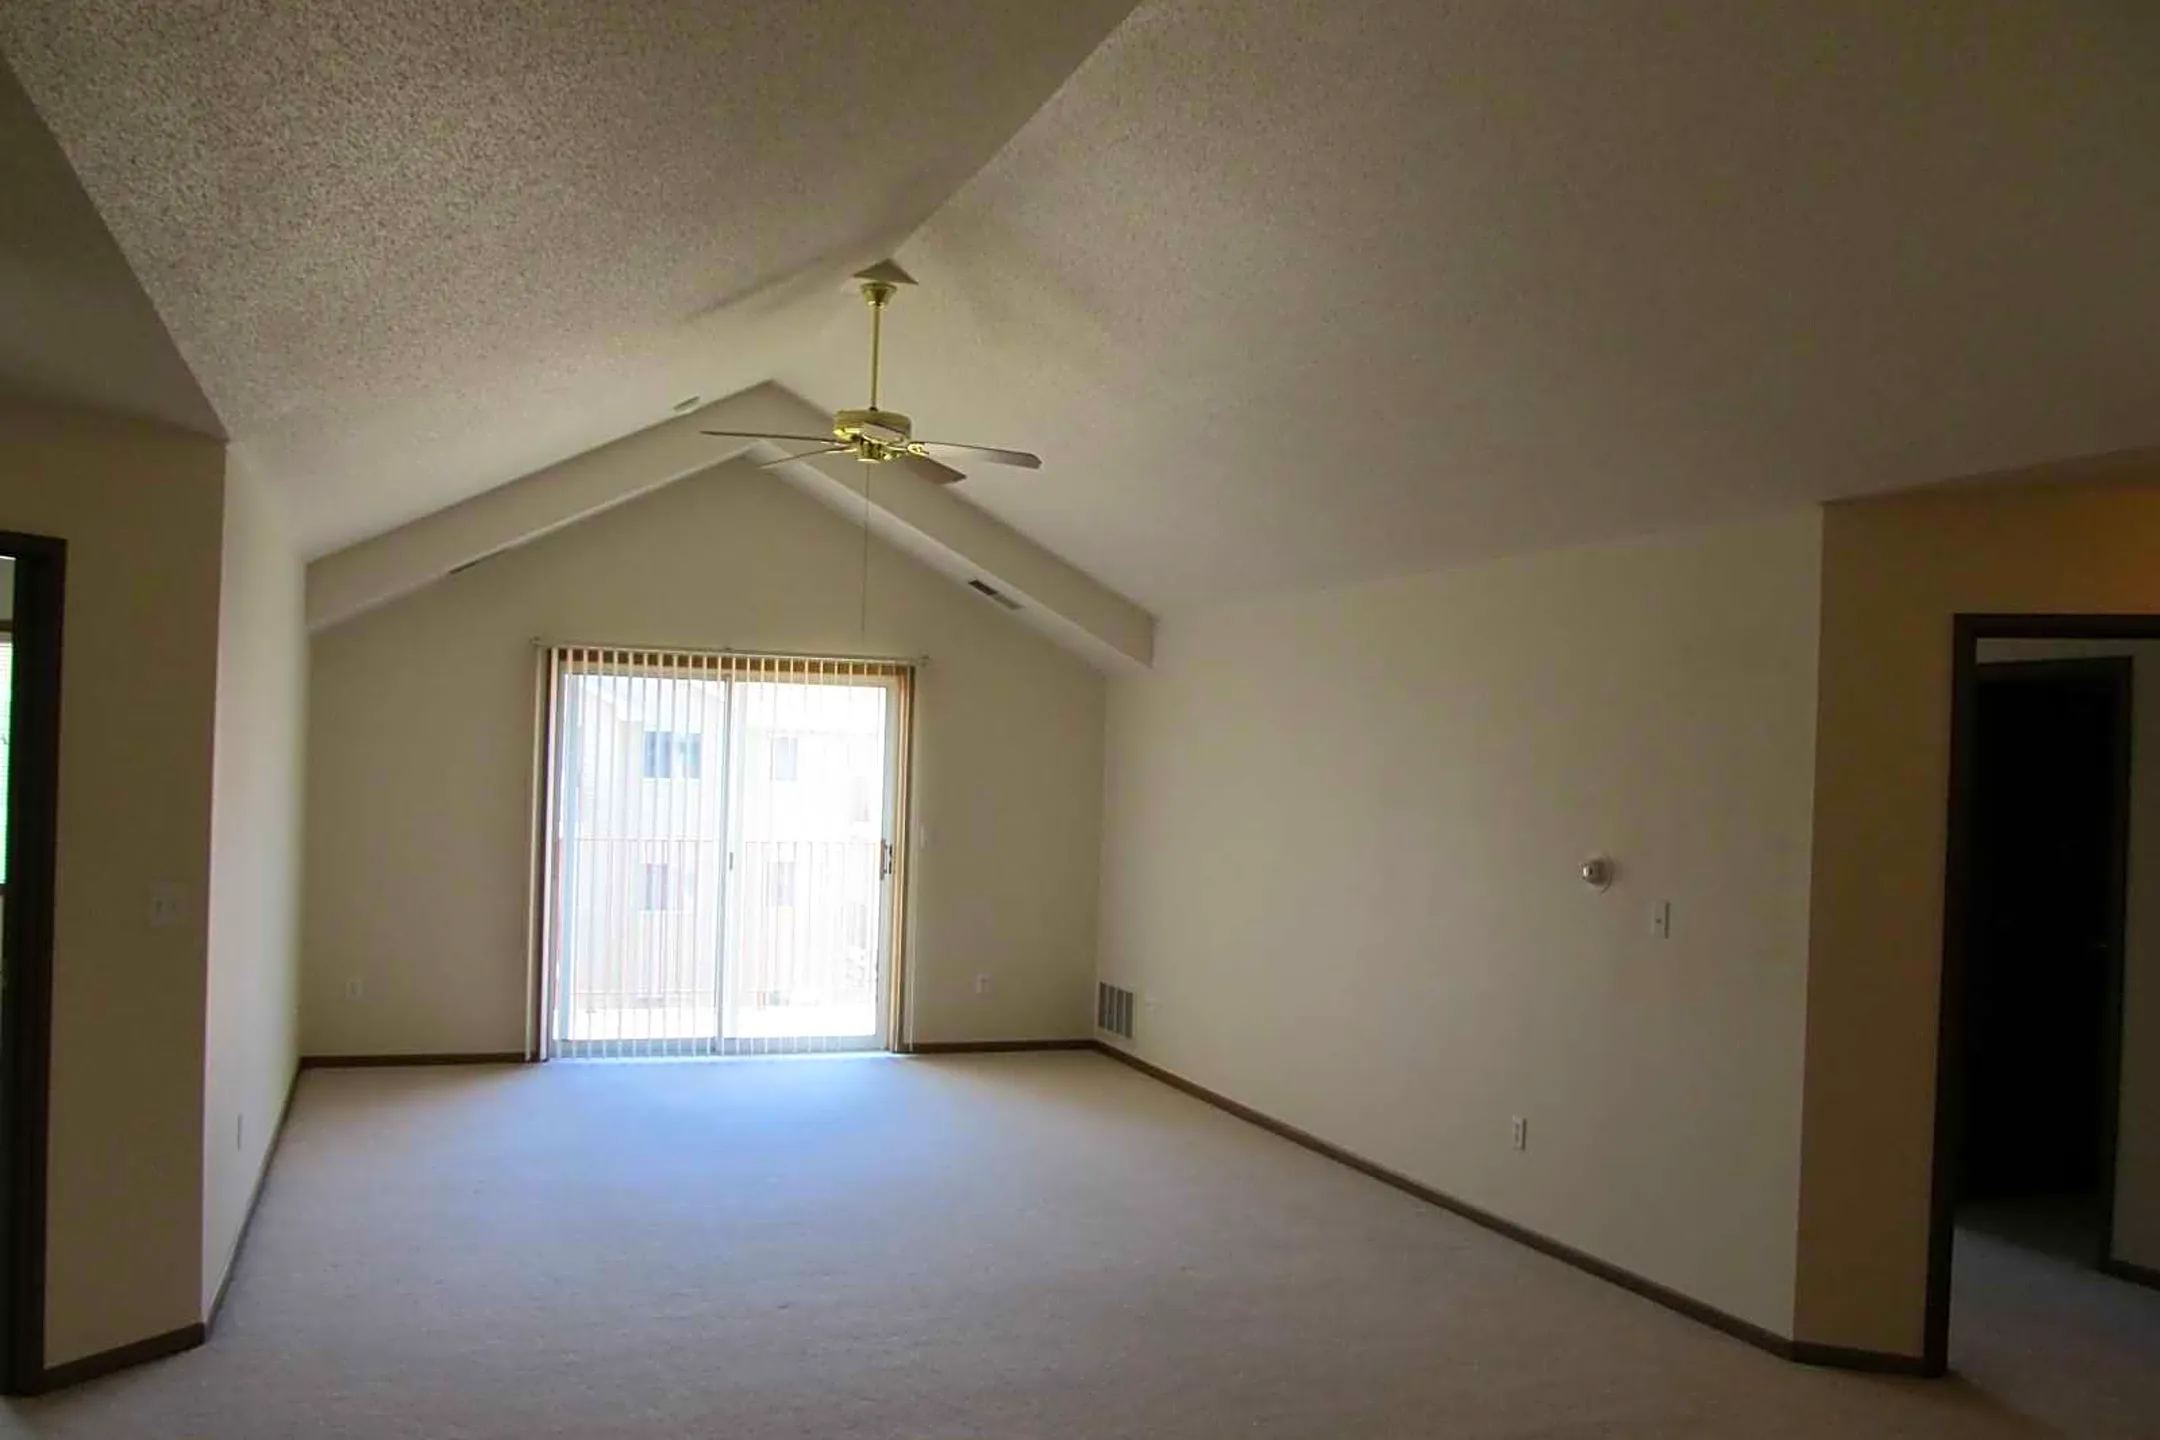 Living Room - Sun West I & II Apartment Homes - Fargo, ND